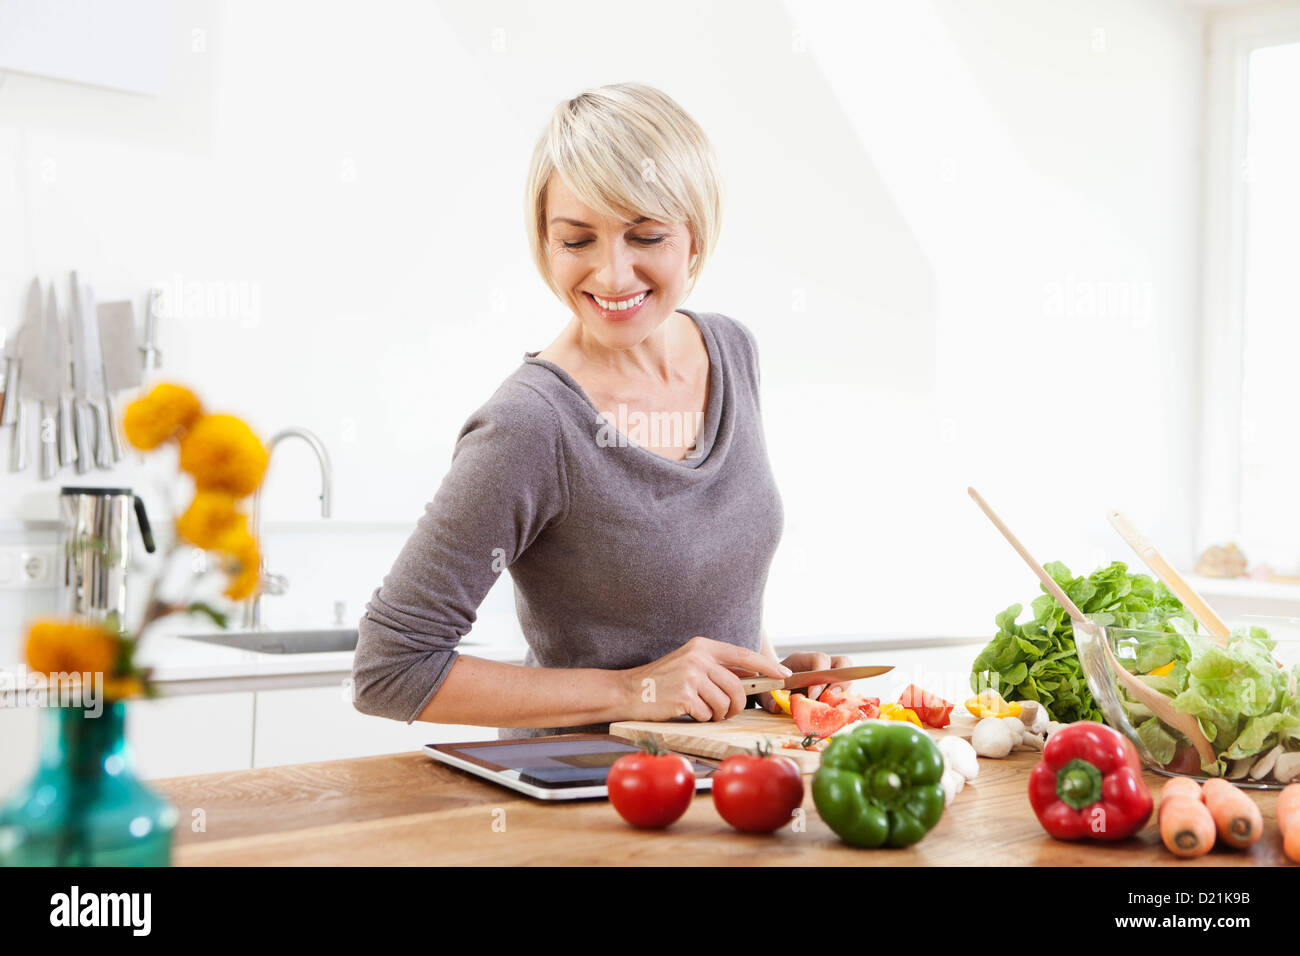 Germany, Bavaria, Munich, Woman preparing food in kitchen Stock Photo